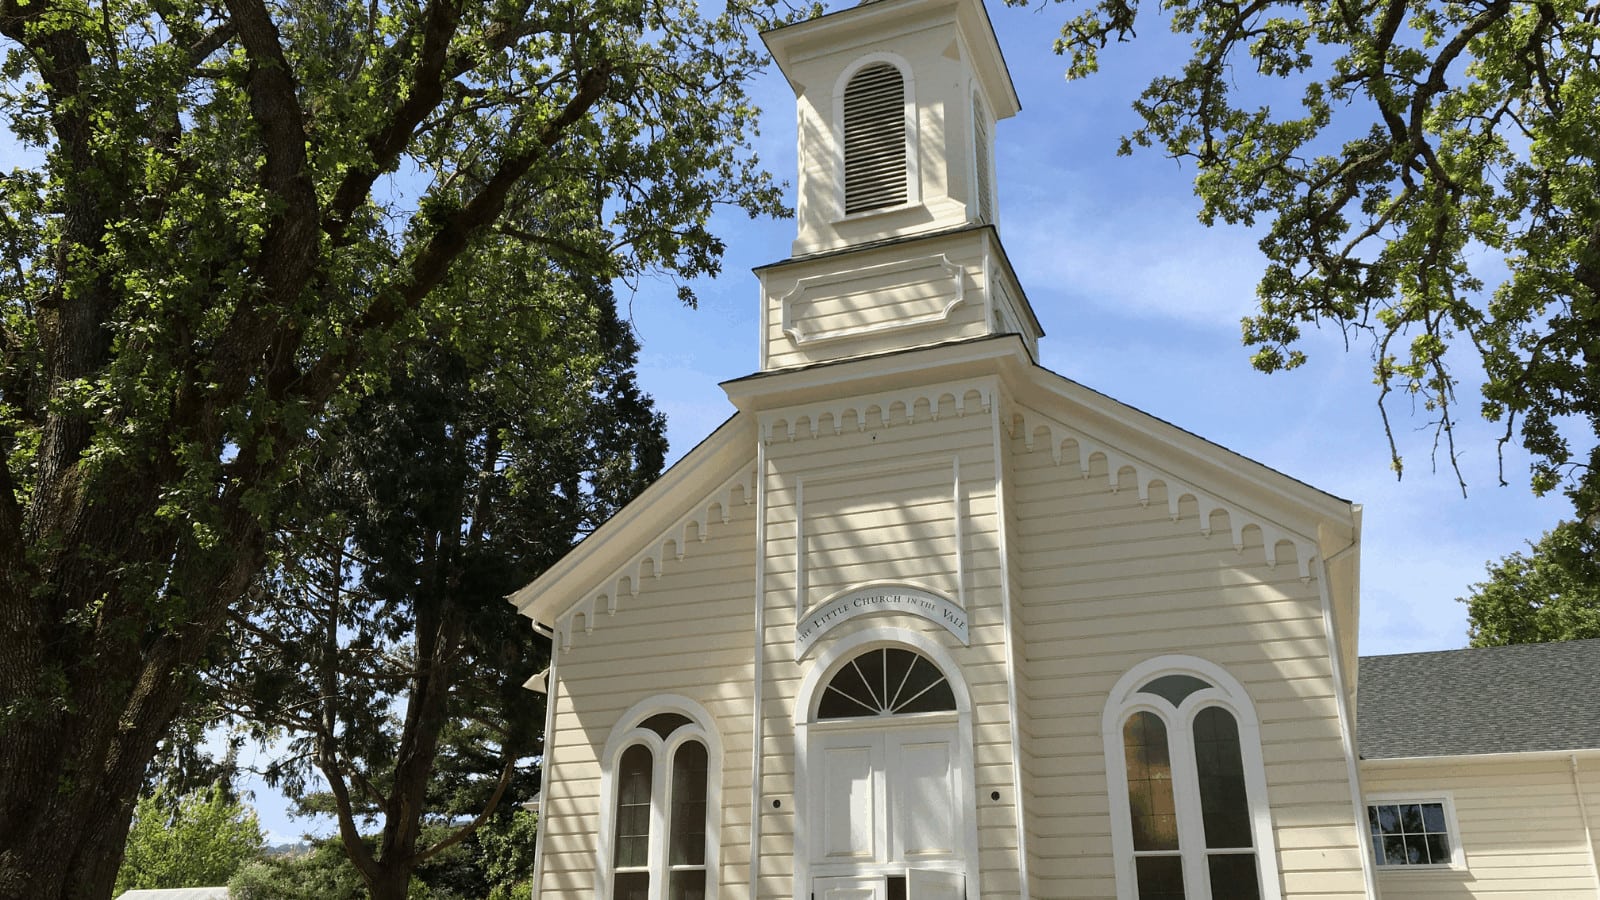 Yountville Community Church